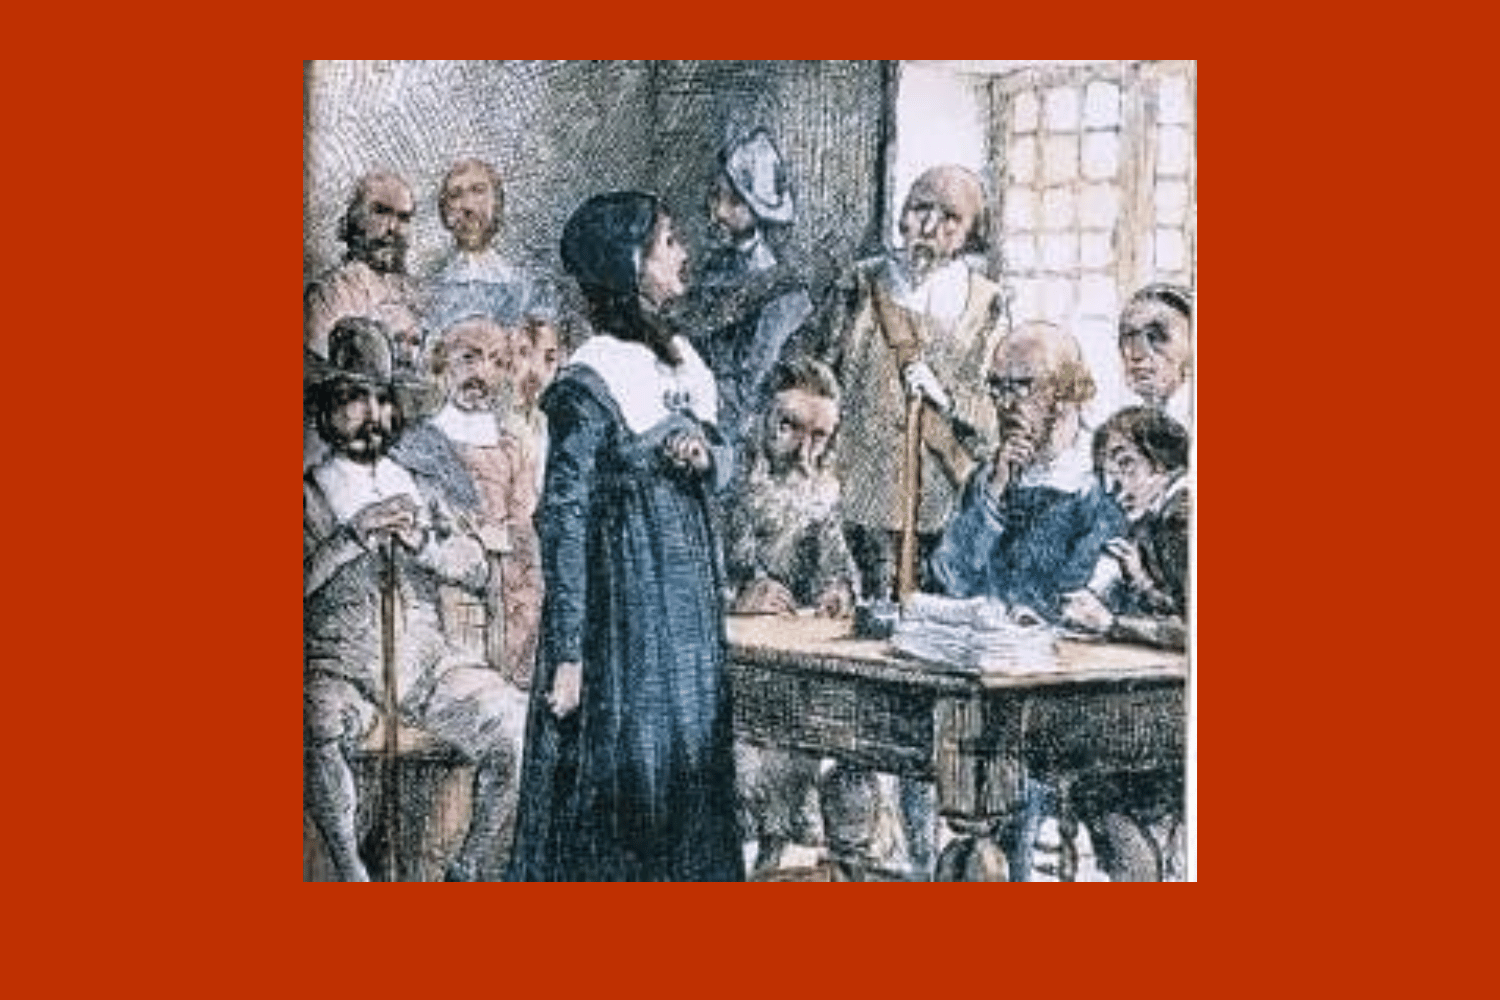 Anne Hutchinson on trial